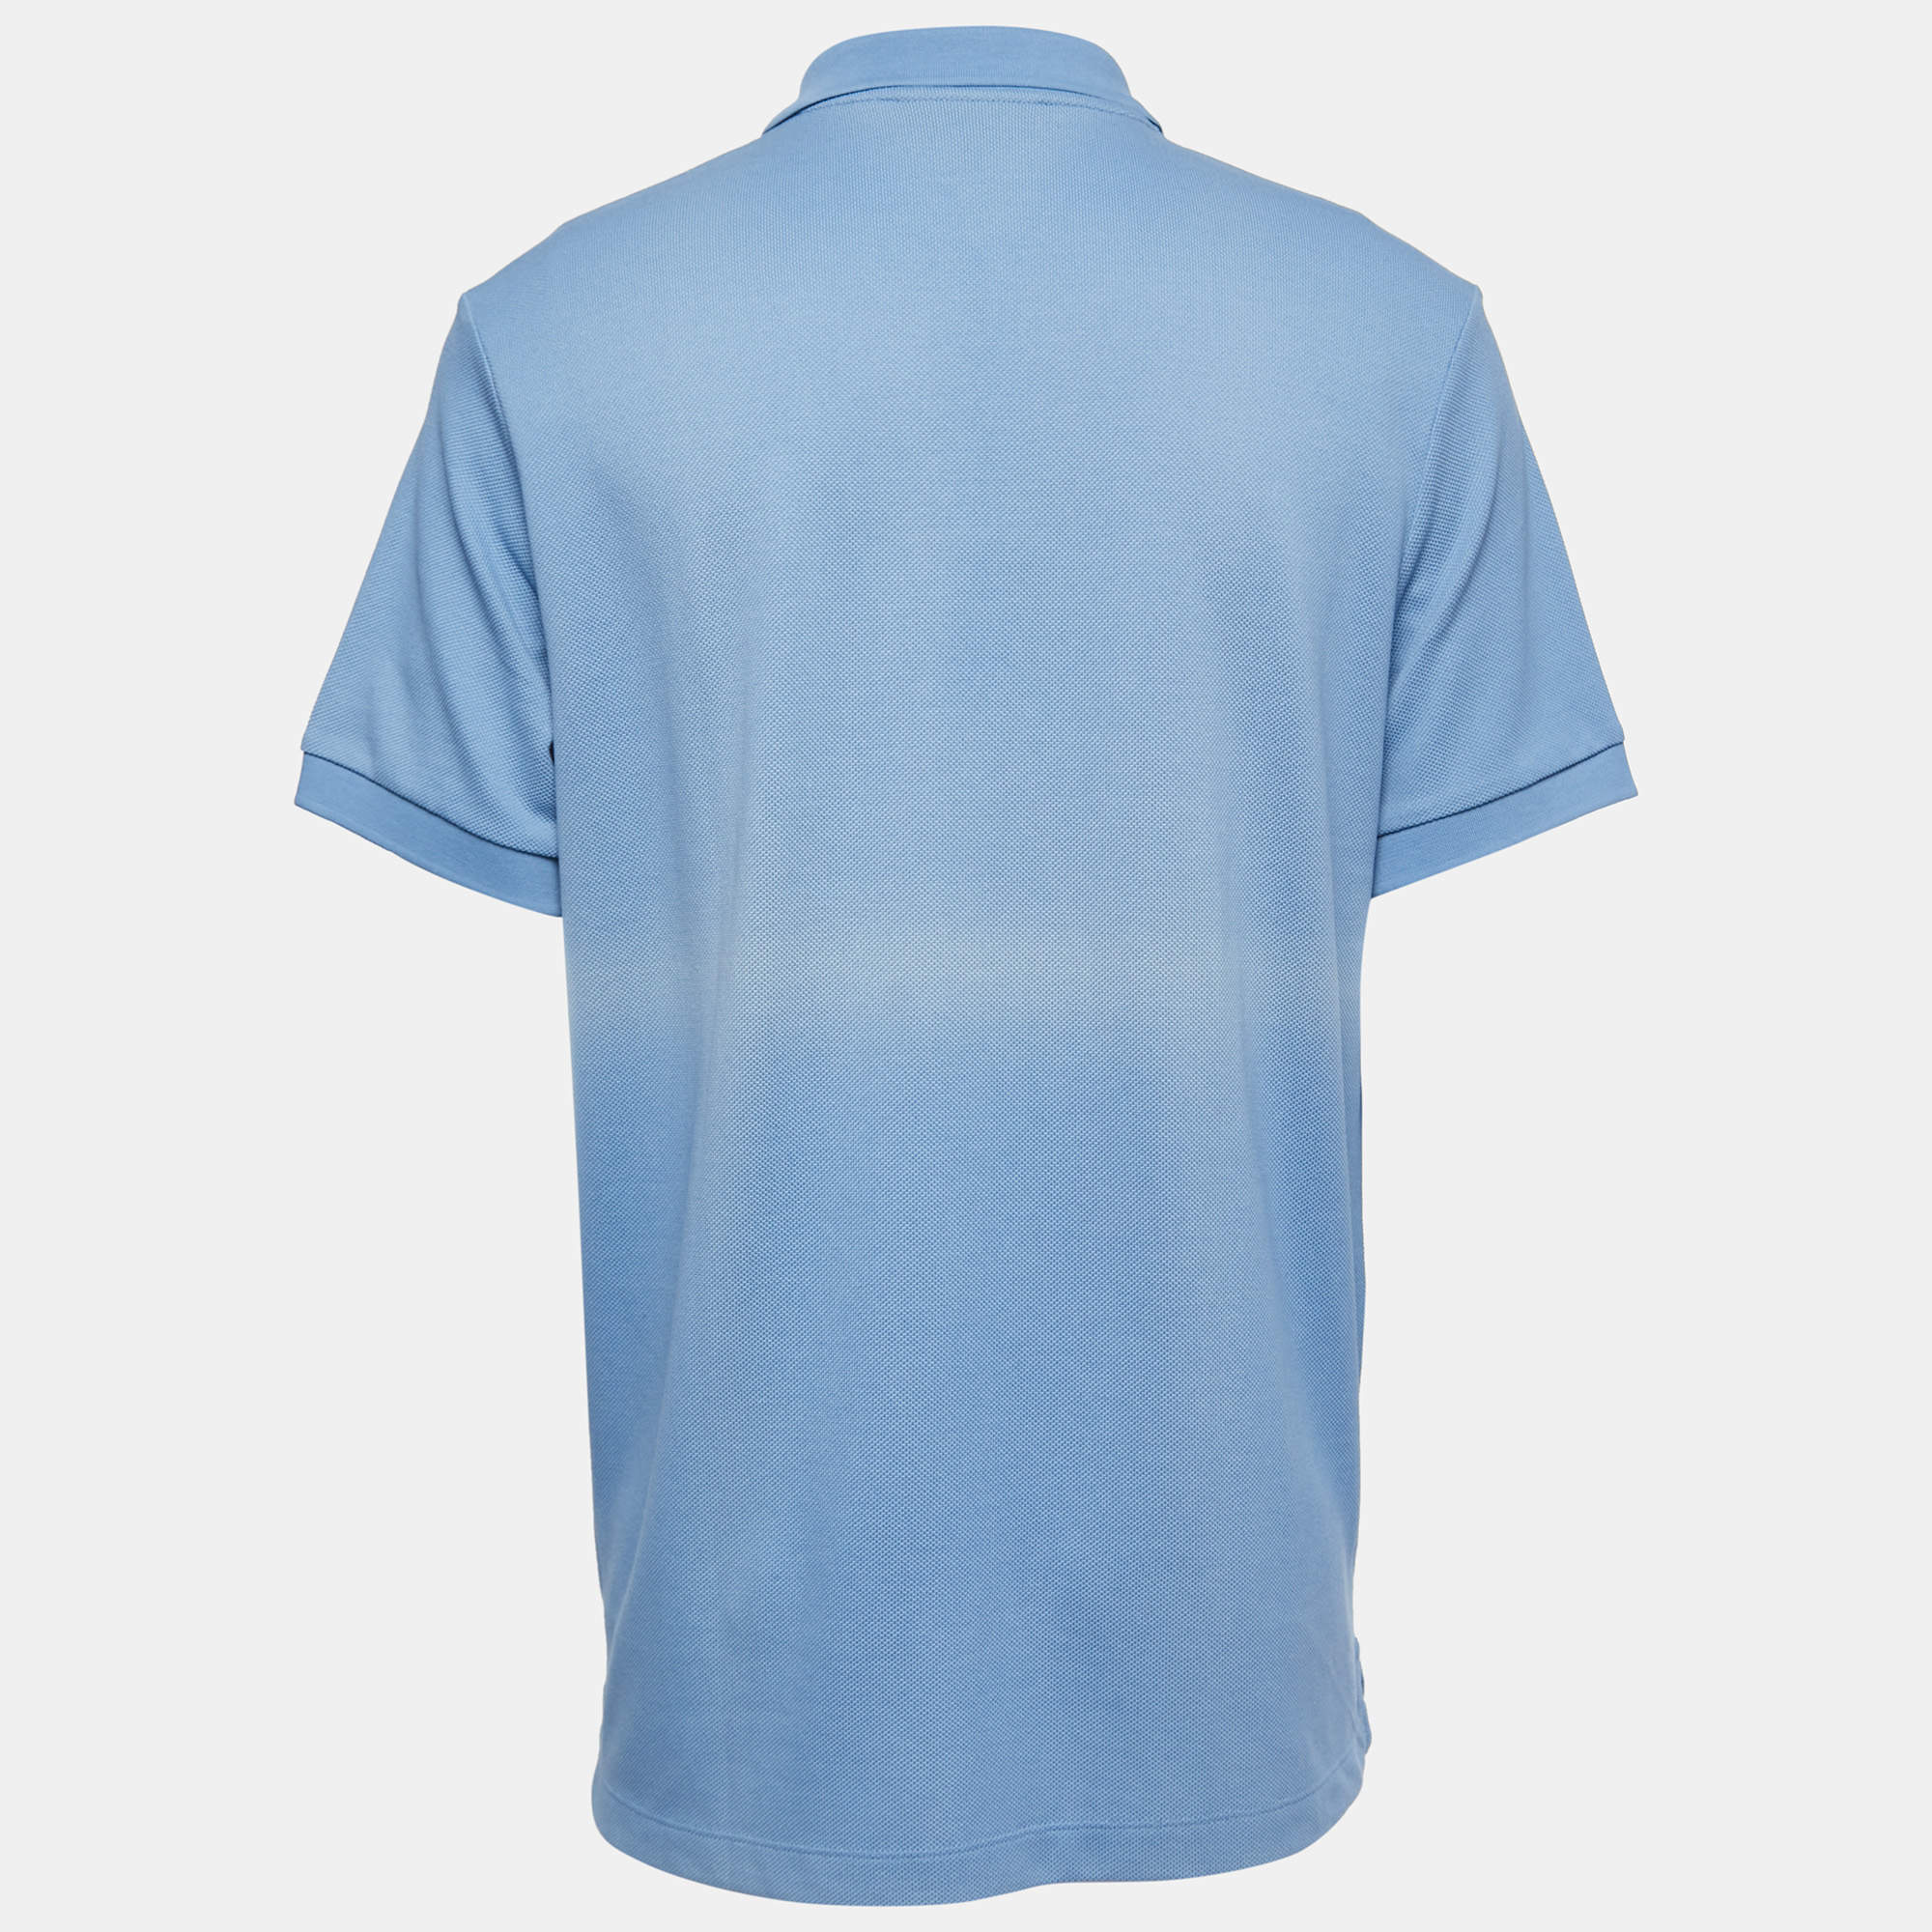 Louis Vuitton Sky White Blue Polo Shirt - LIMITED EDITION